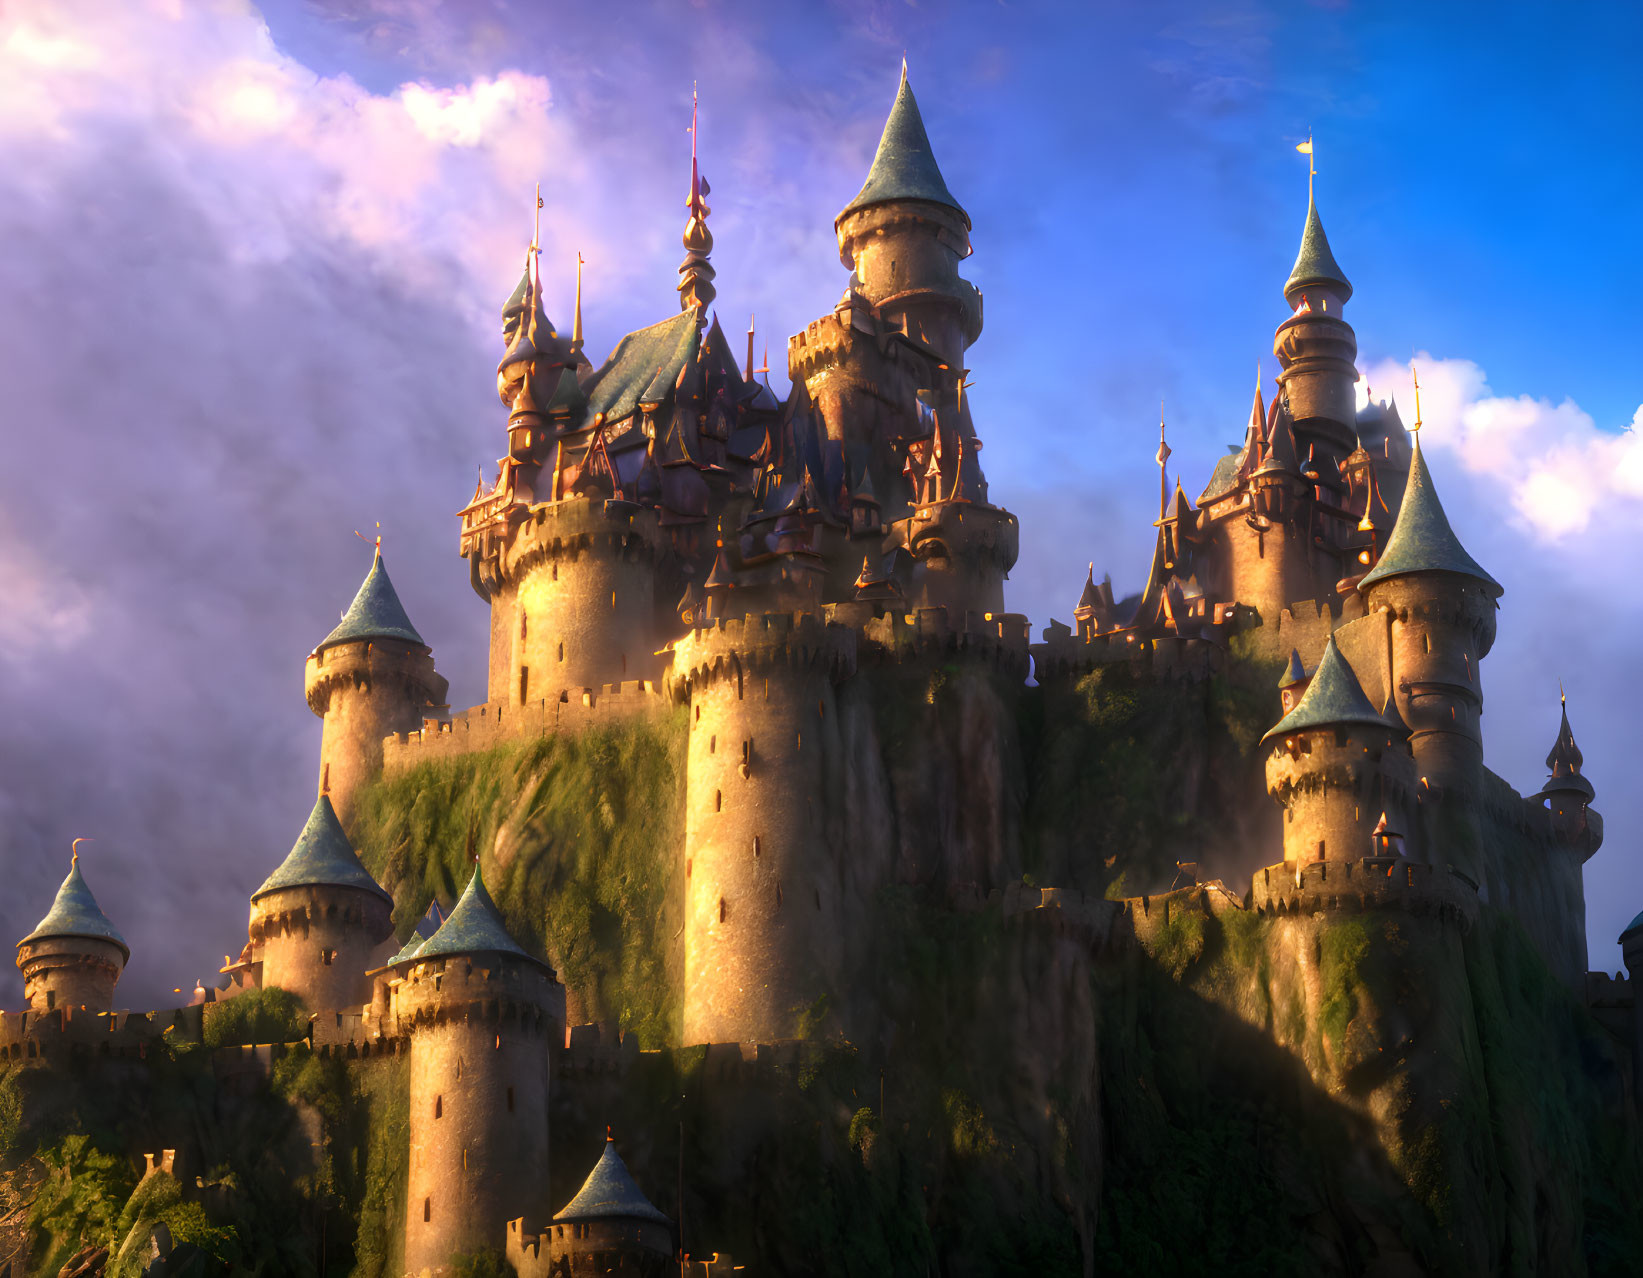 Digital illustration of fairytale castle on green hilltop with spires under dramatic sunset sky